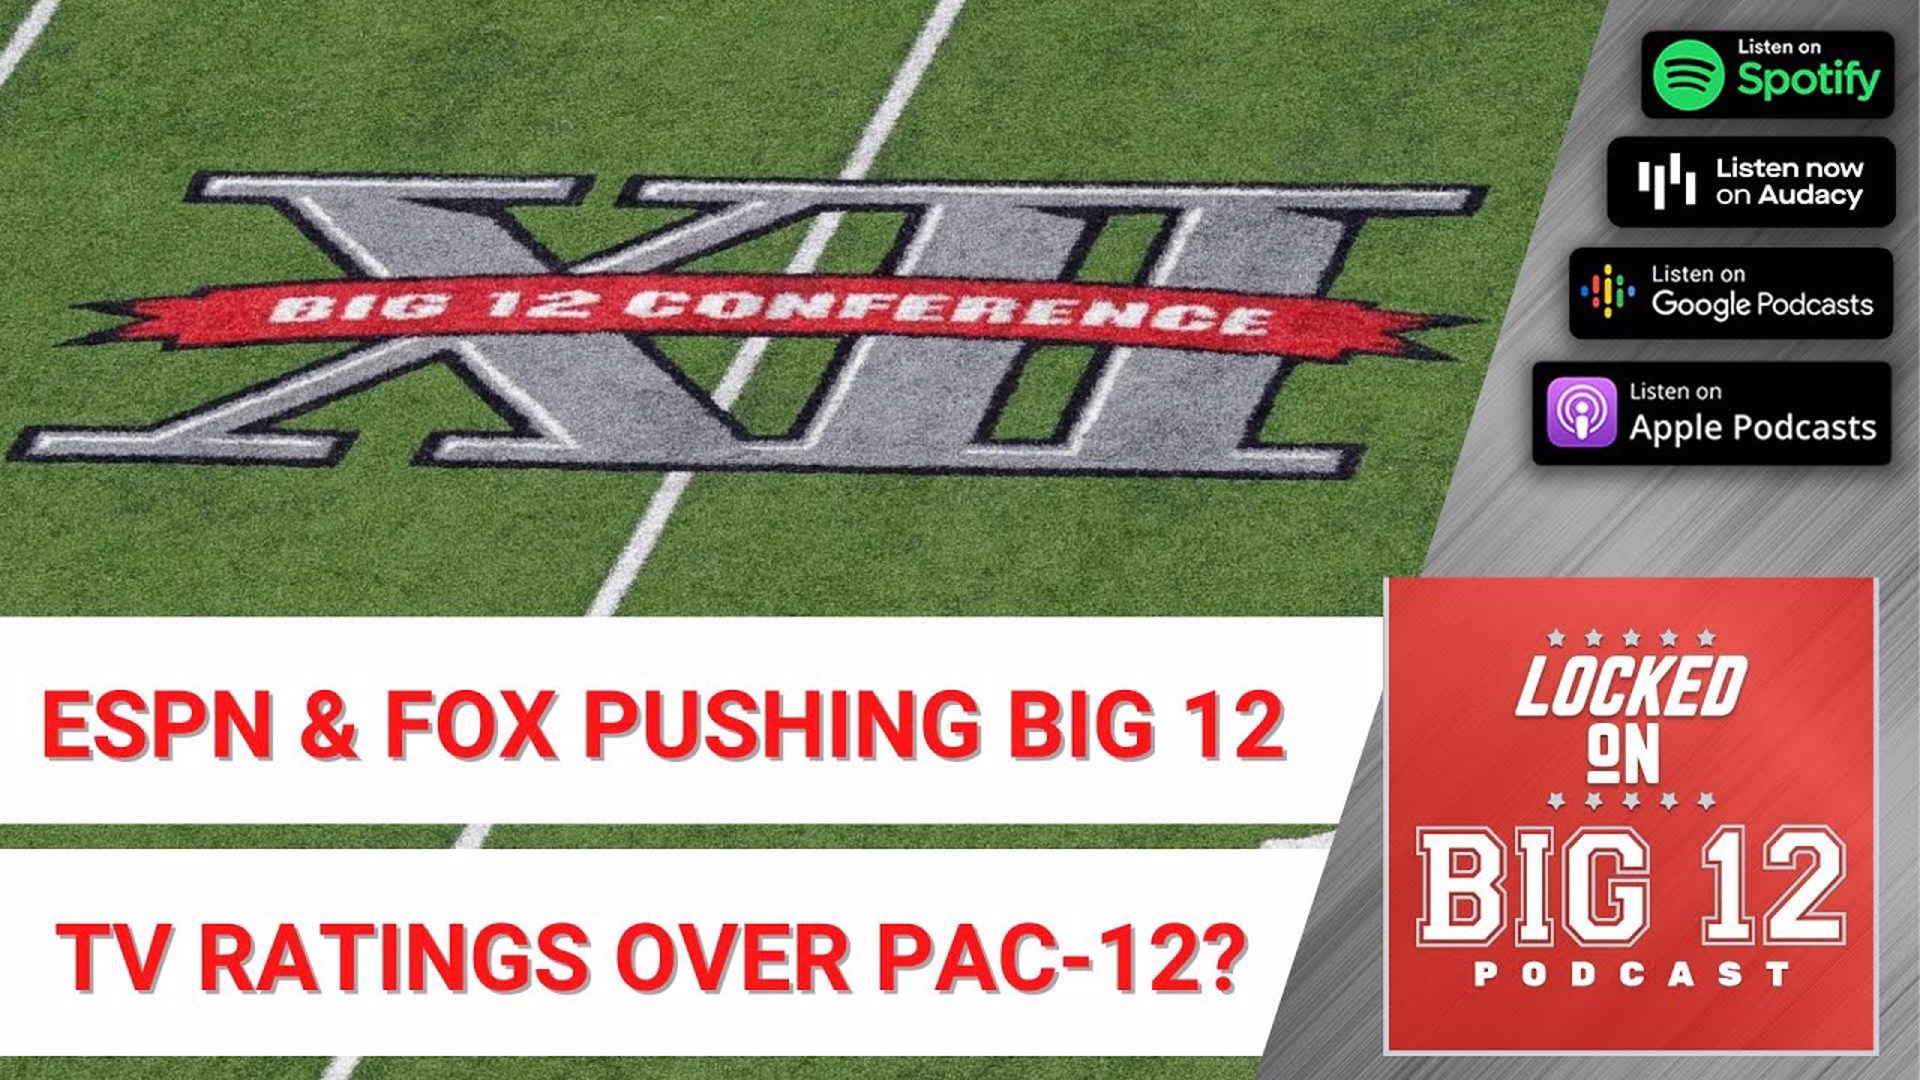 Big 12 Posts Big TV Ratings + ESPN & FOX To Push Big 12 Ratings Over Pac-12? - Tuesday Takes